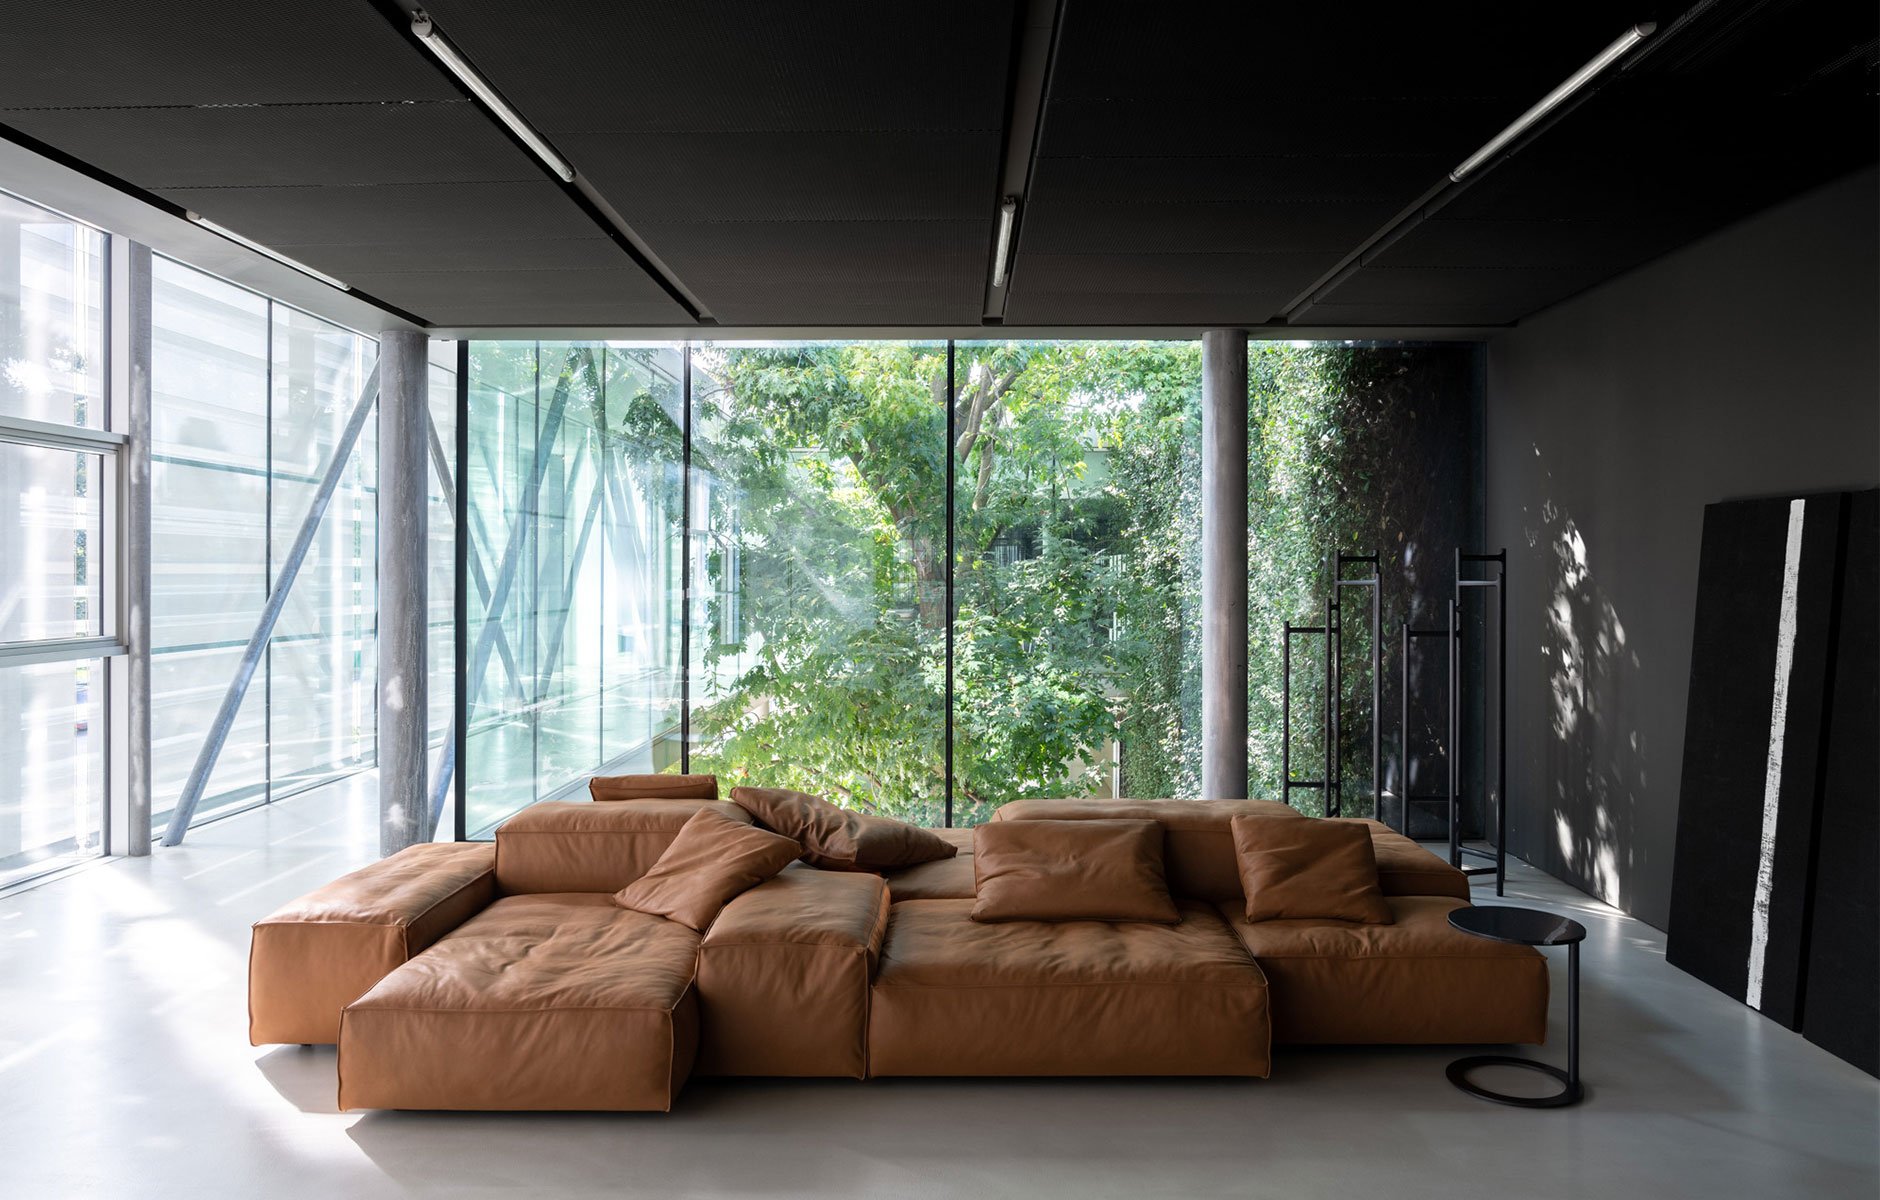 Living Divani headquarters at Anzano del Parco, featuring Extrasoft sofa by Piero Lissoni. Photo c/o Living Divani. 